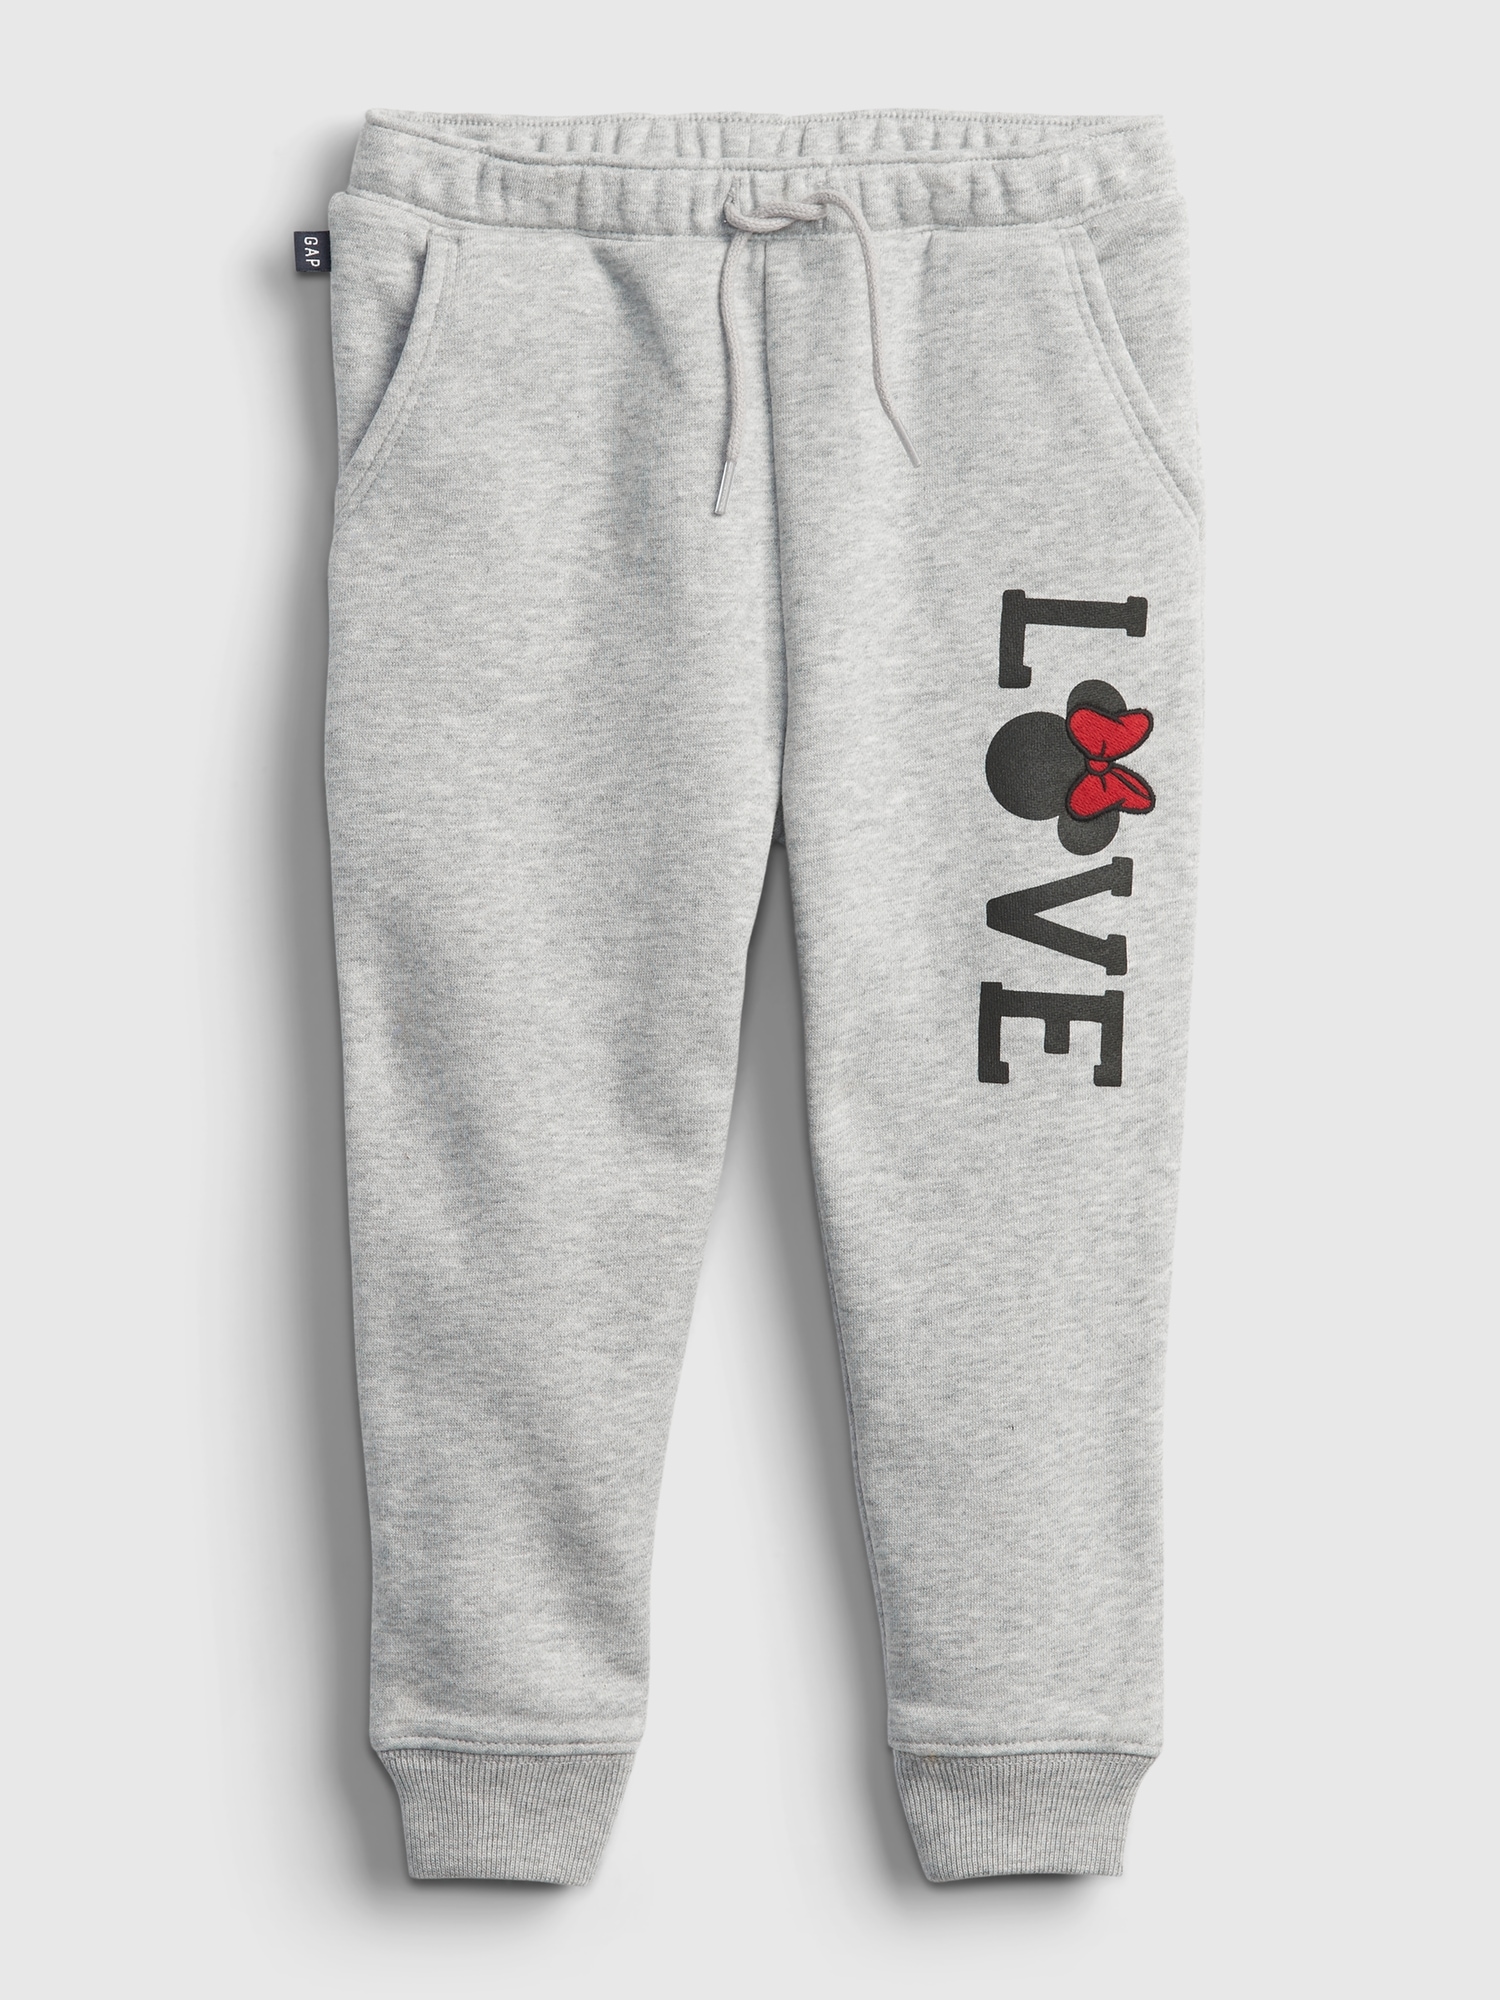 LOVE BY Gap Women's Softspun Joggers LOVE Lounge Pants #49514-3#I